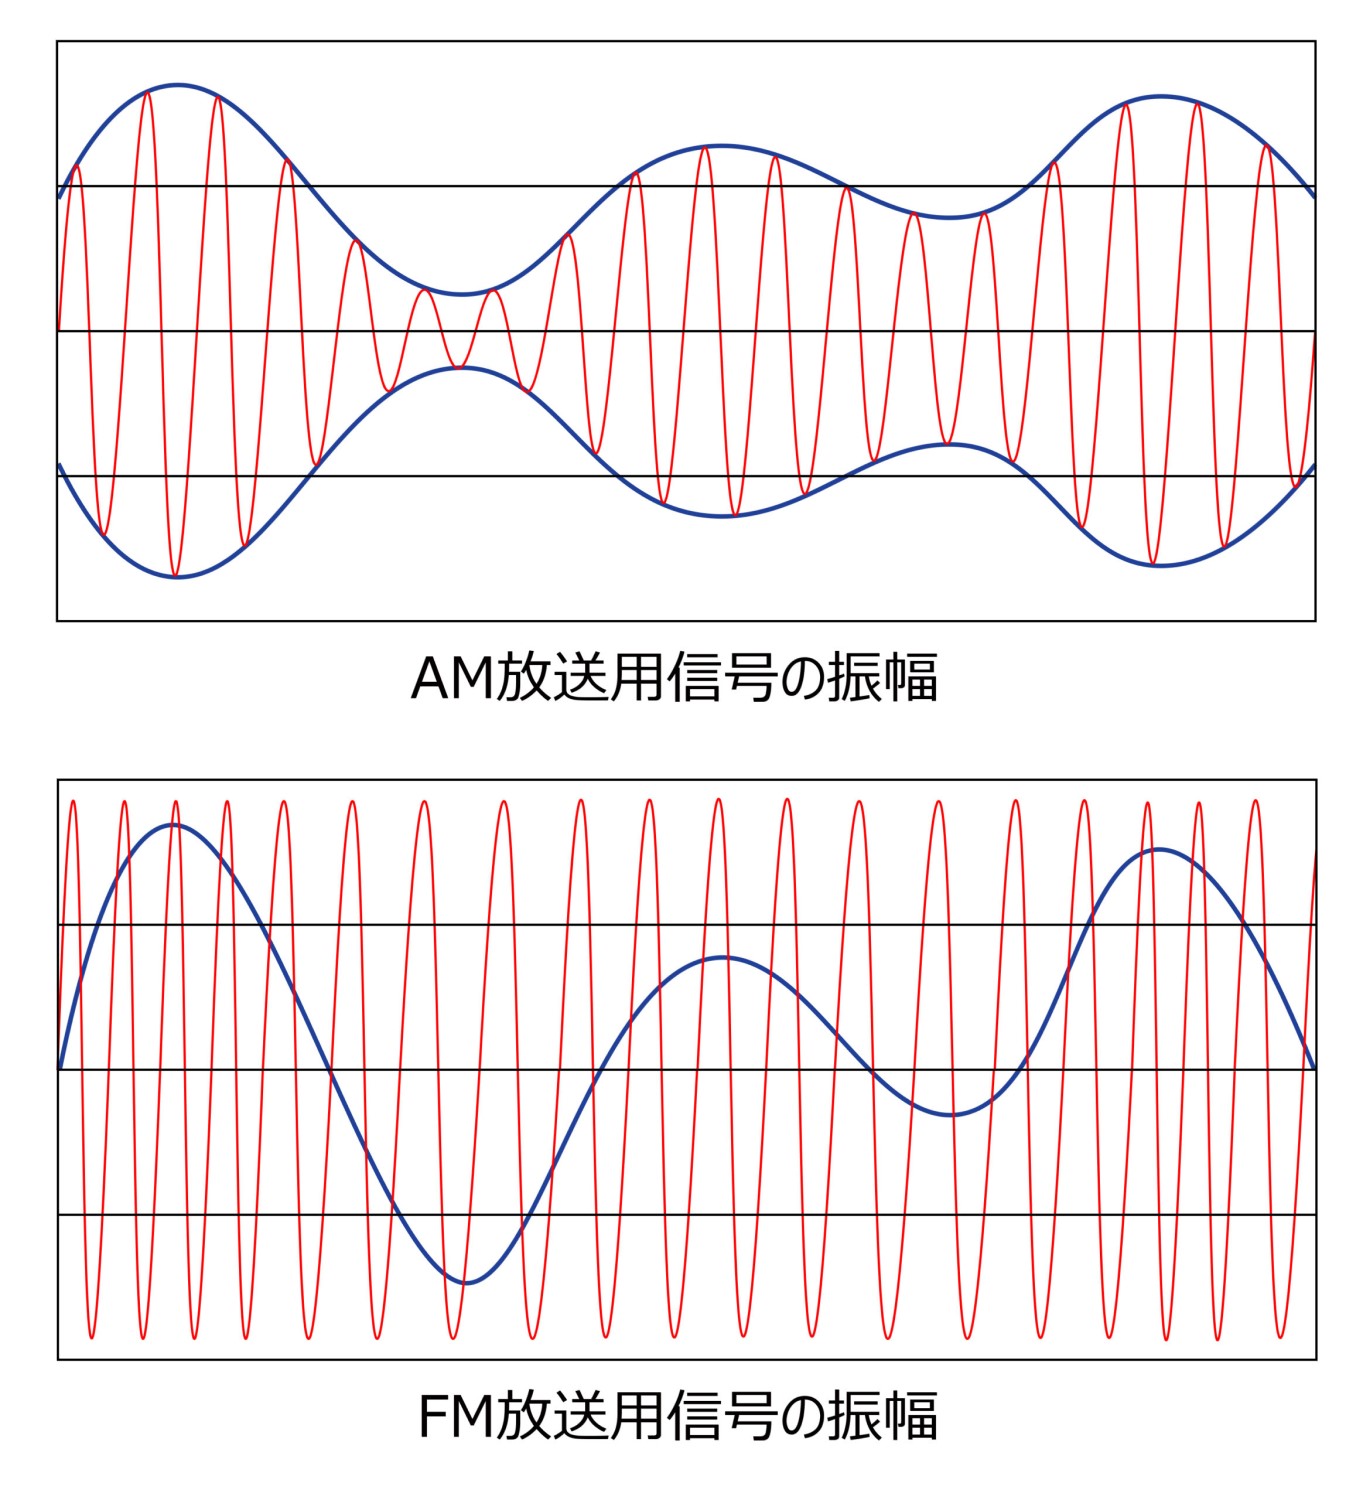 AM放送用信号とFM放送用信号の振幅